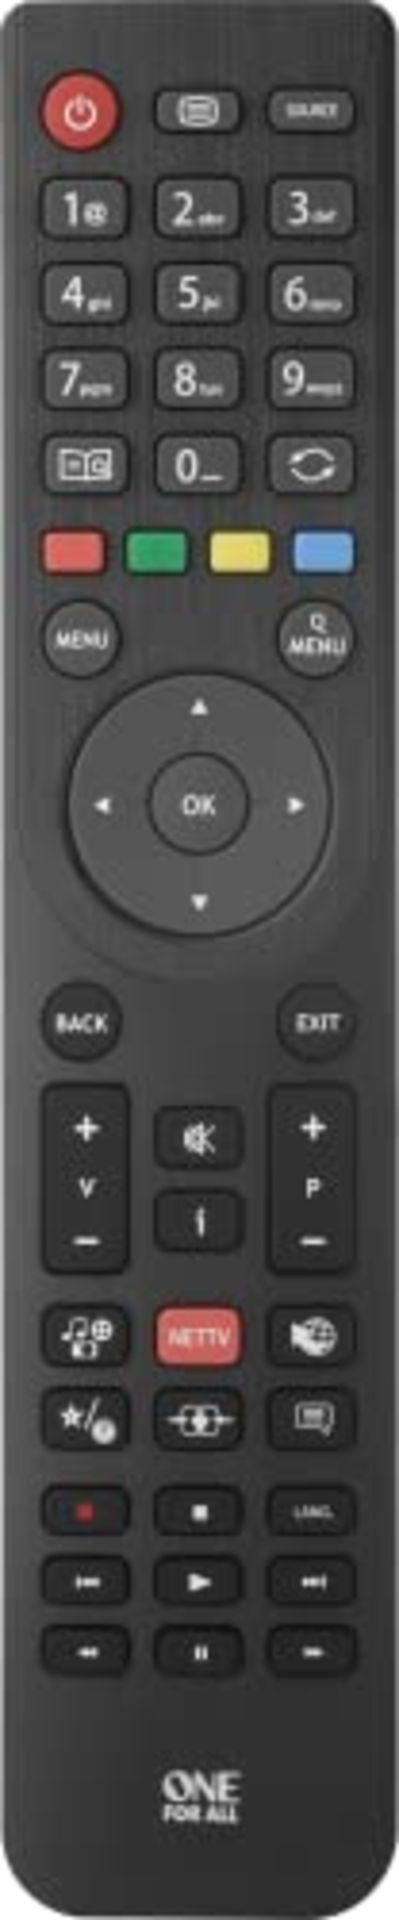 One For All Telefunken URC1918 TV Remote Control - Works with All Telefunken TV/Smart